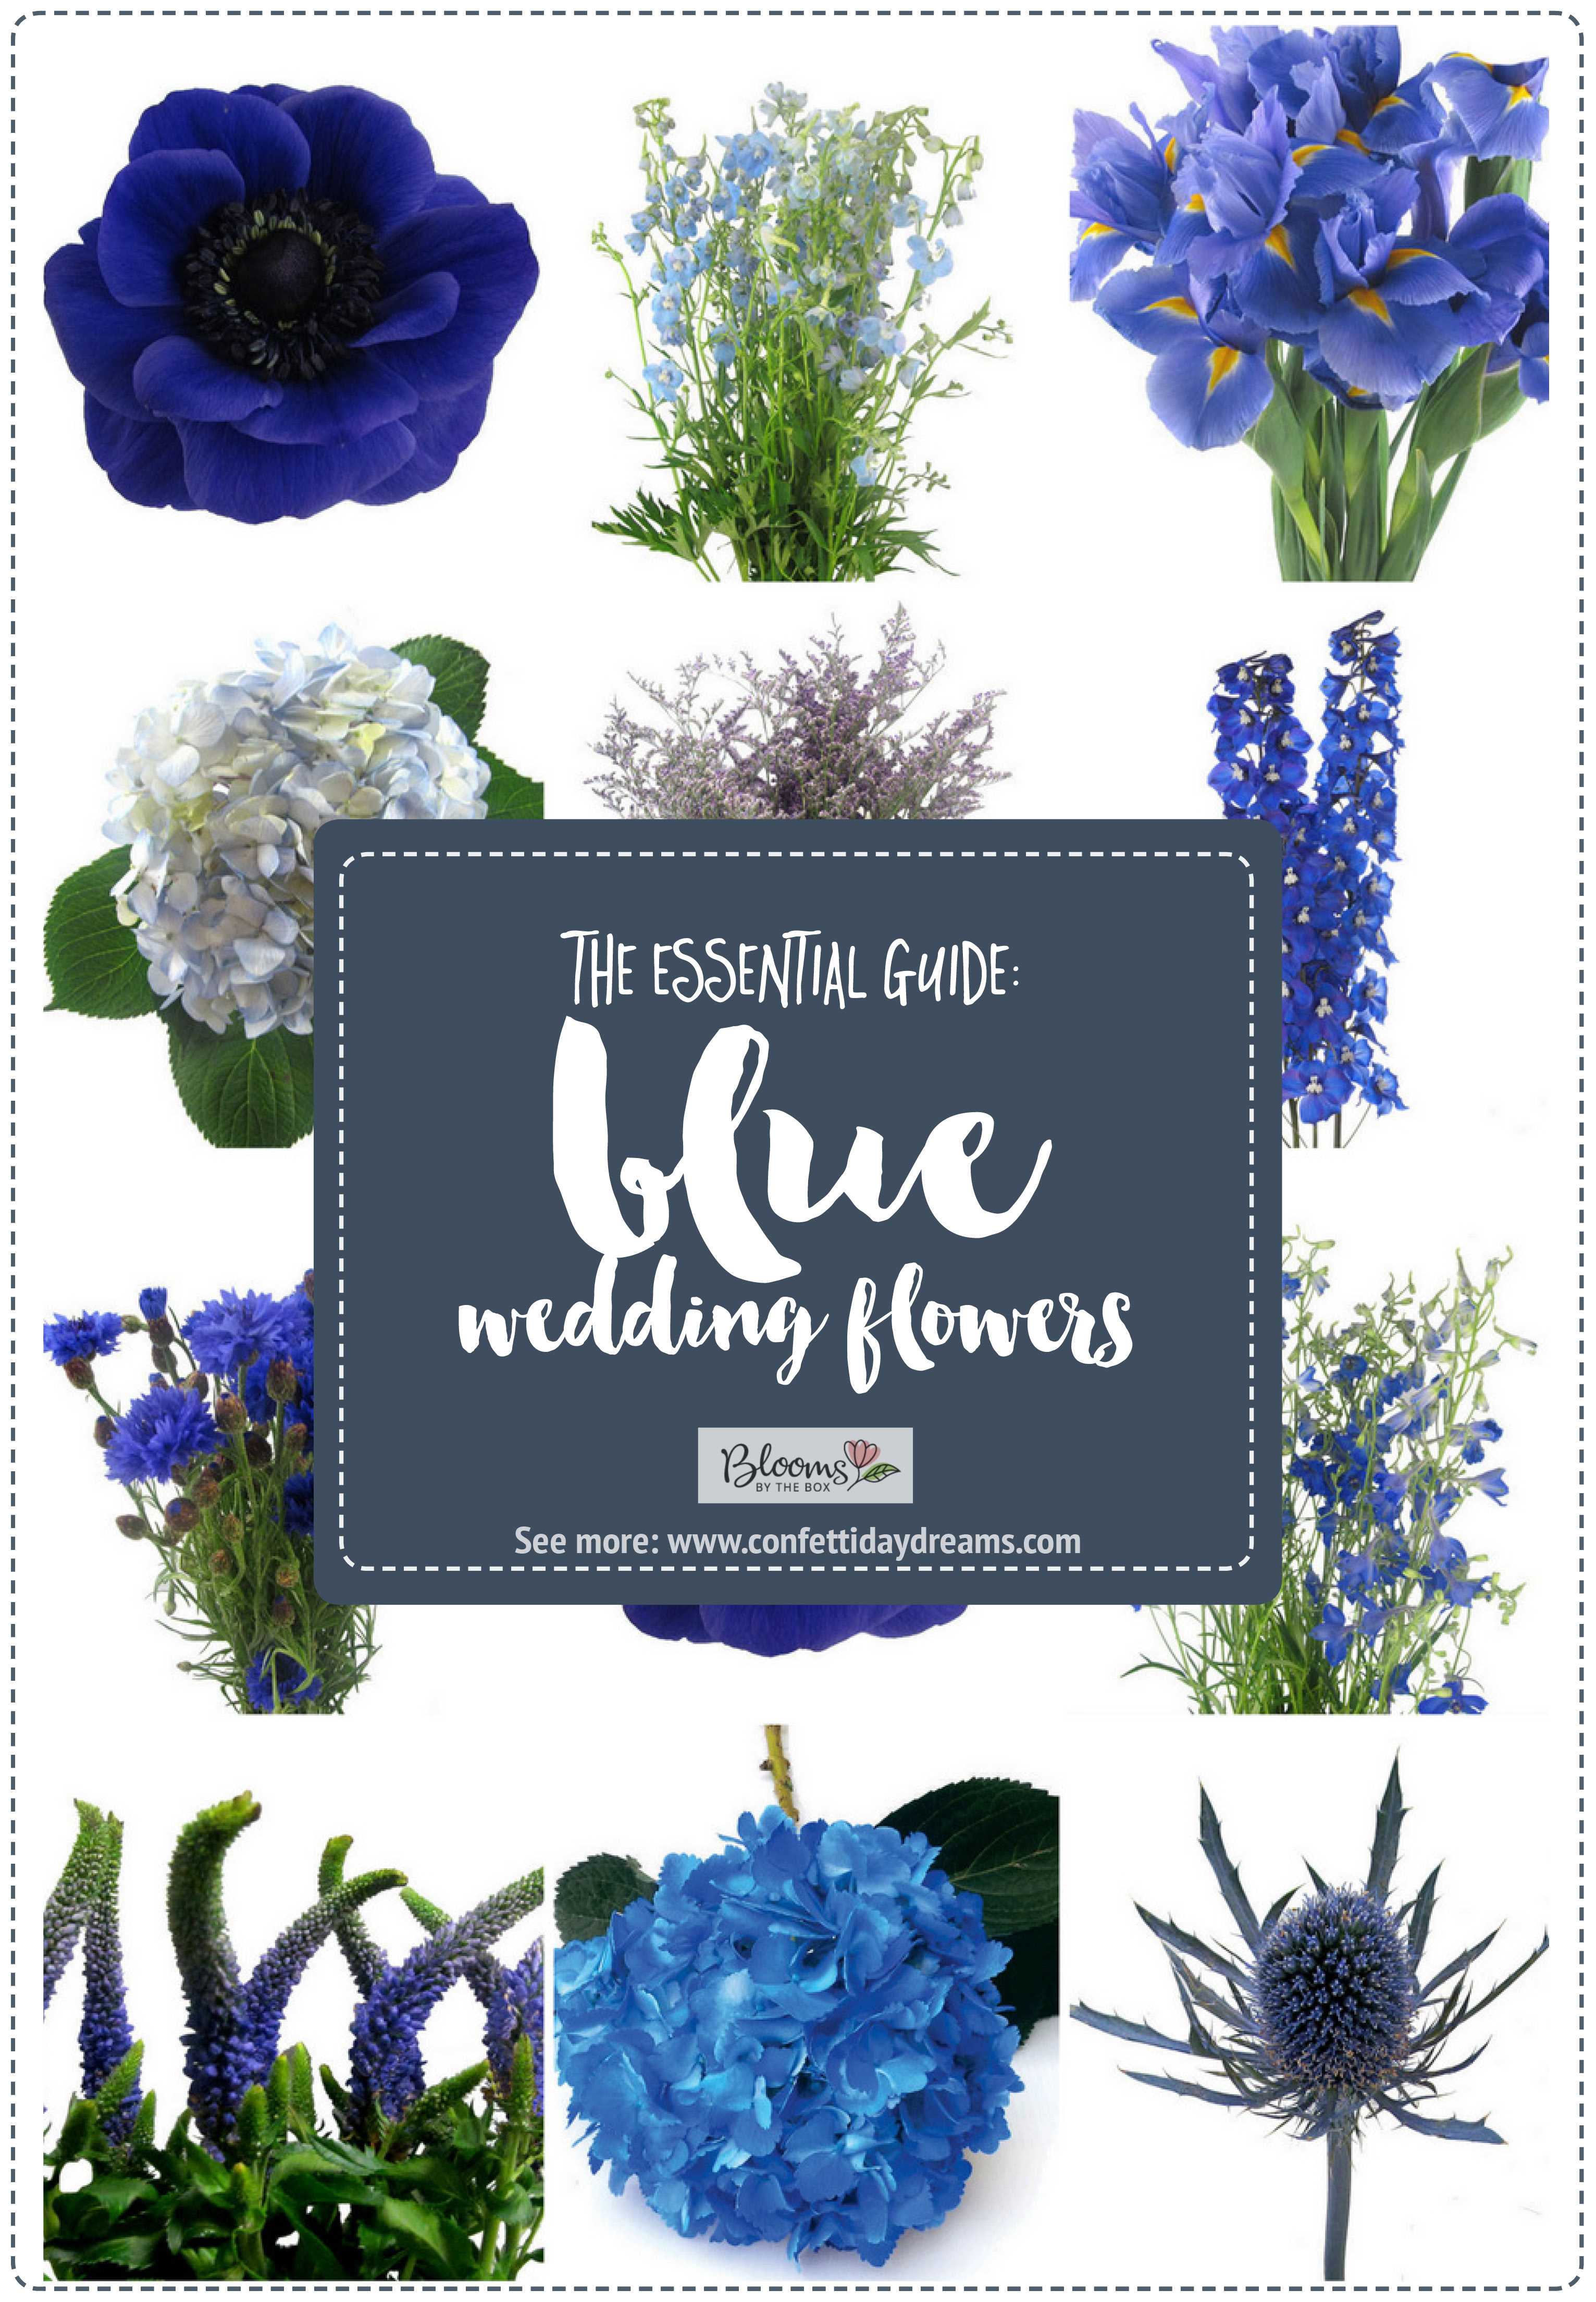 Blue wedding flowers names